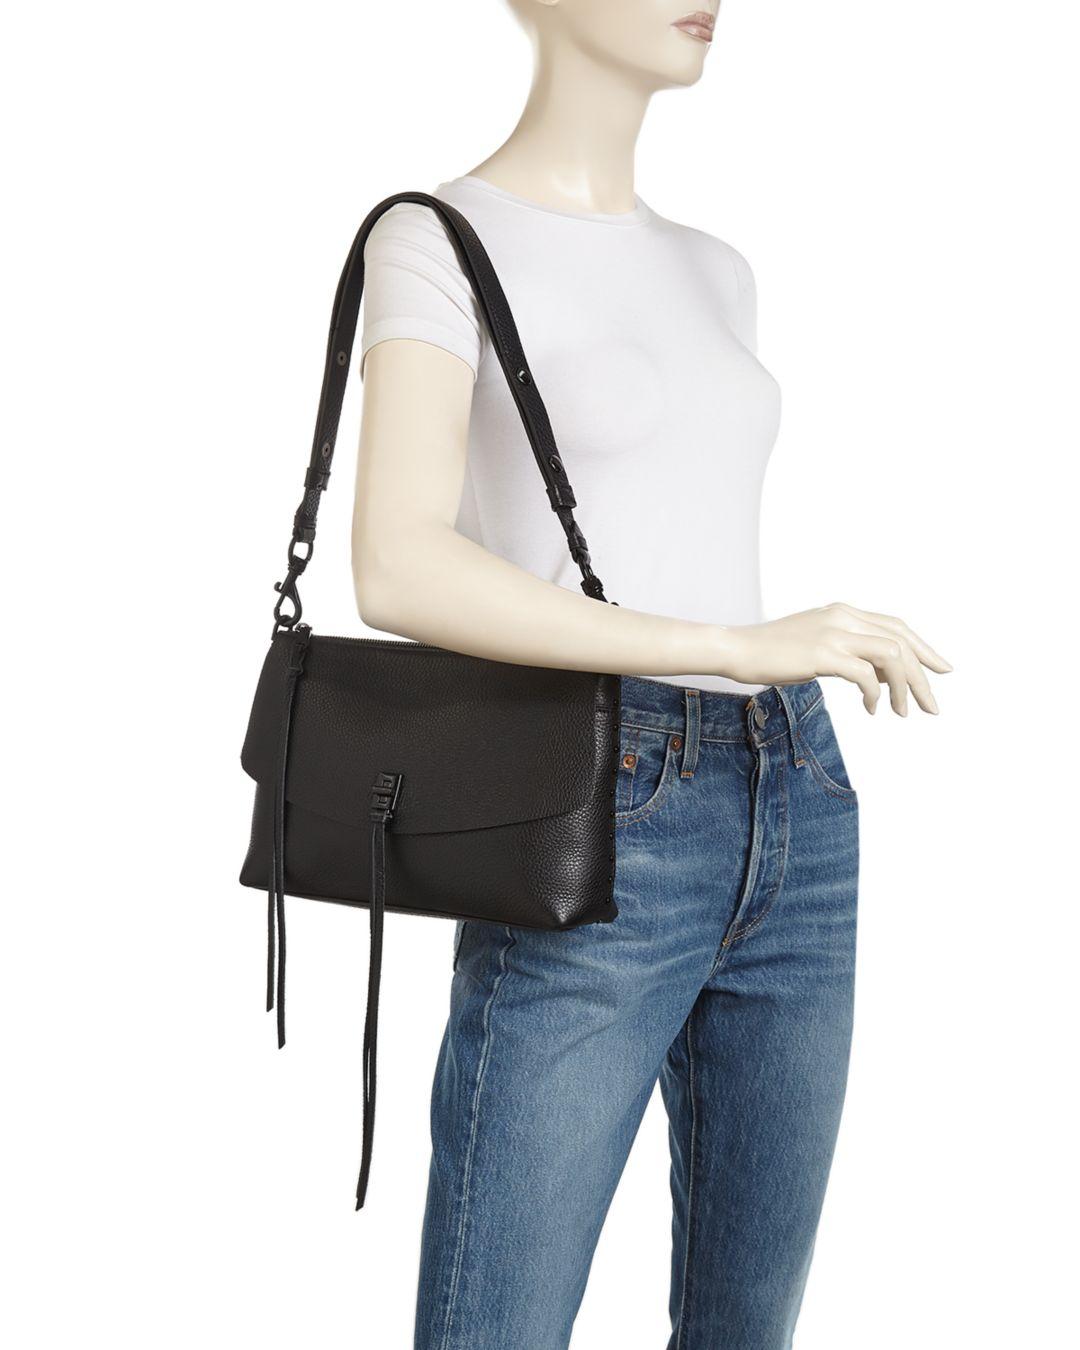 Rebecca Minkoff Darren Small Leather Shoulder Bag in Black - Lyst